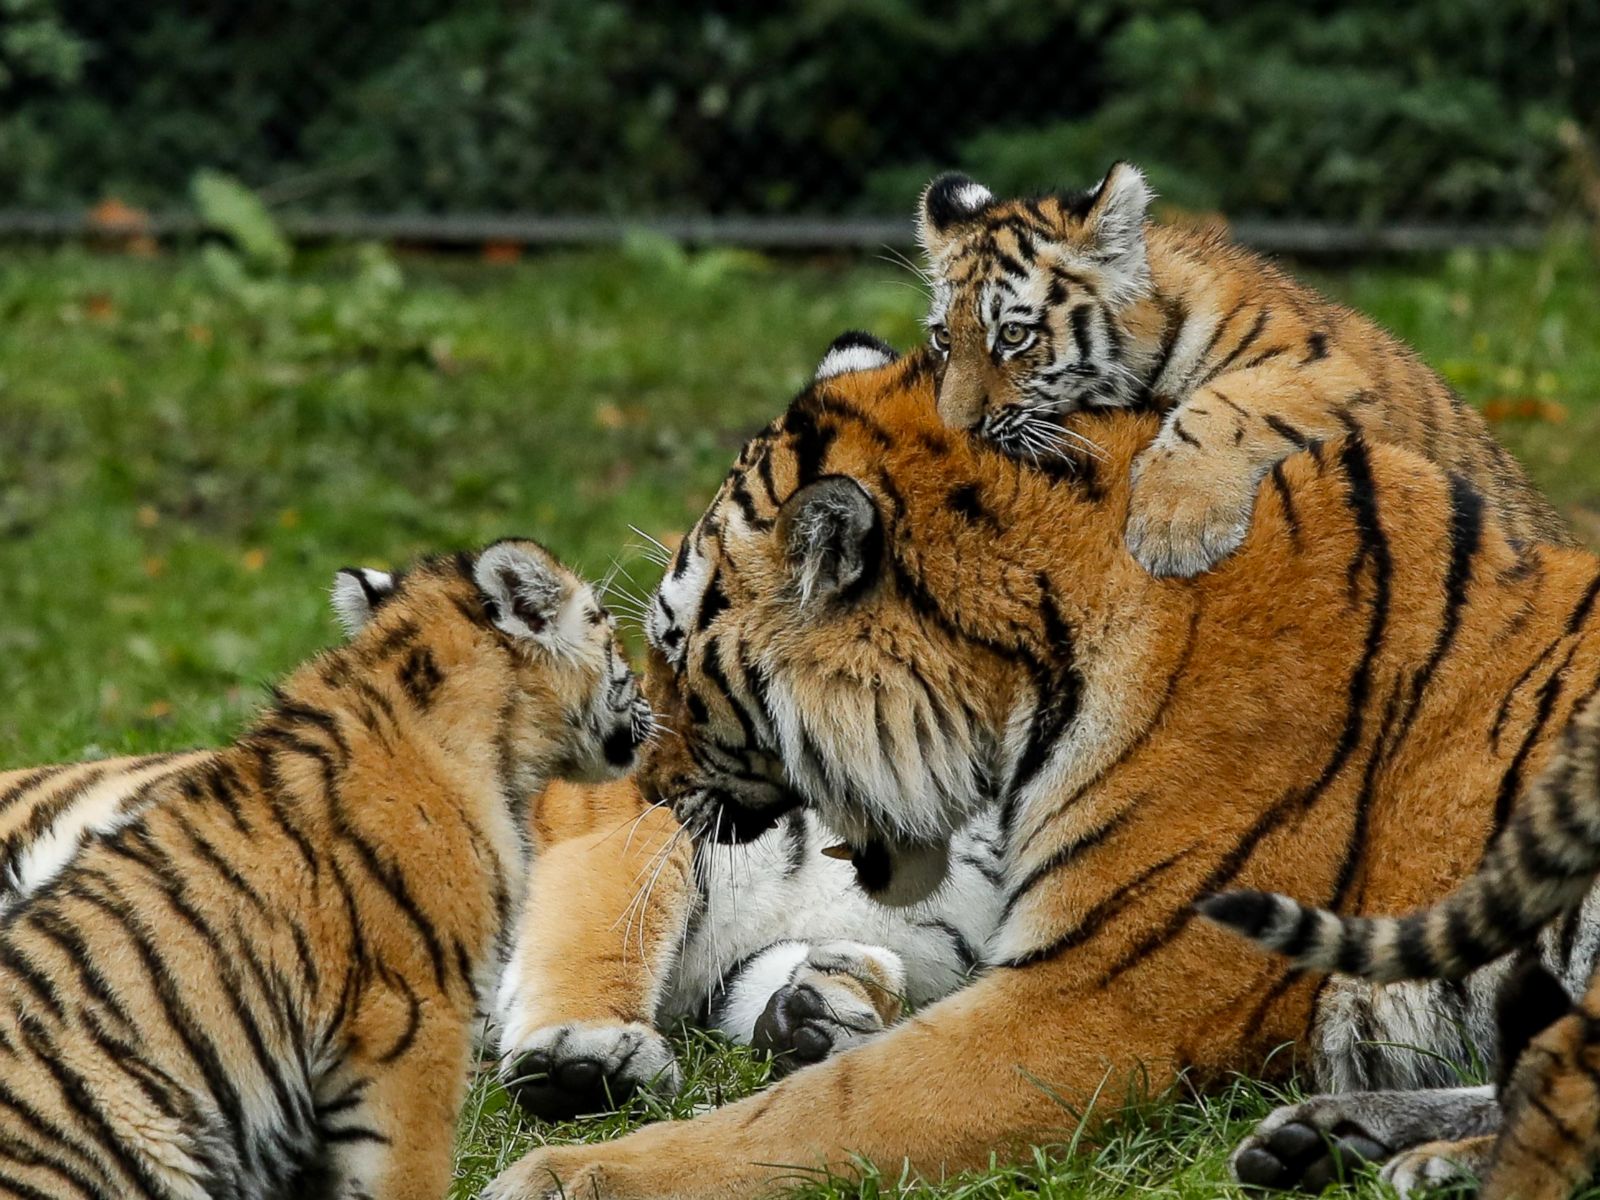 a.abcnews.com/images/International/tiger-dad-meet2...